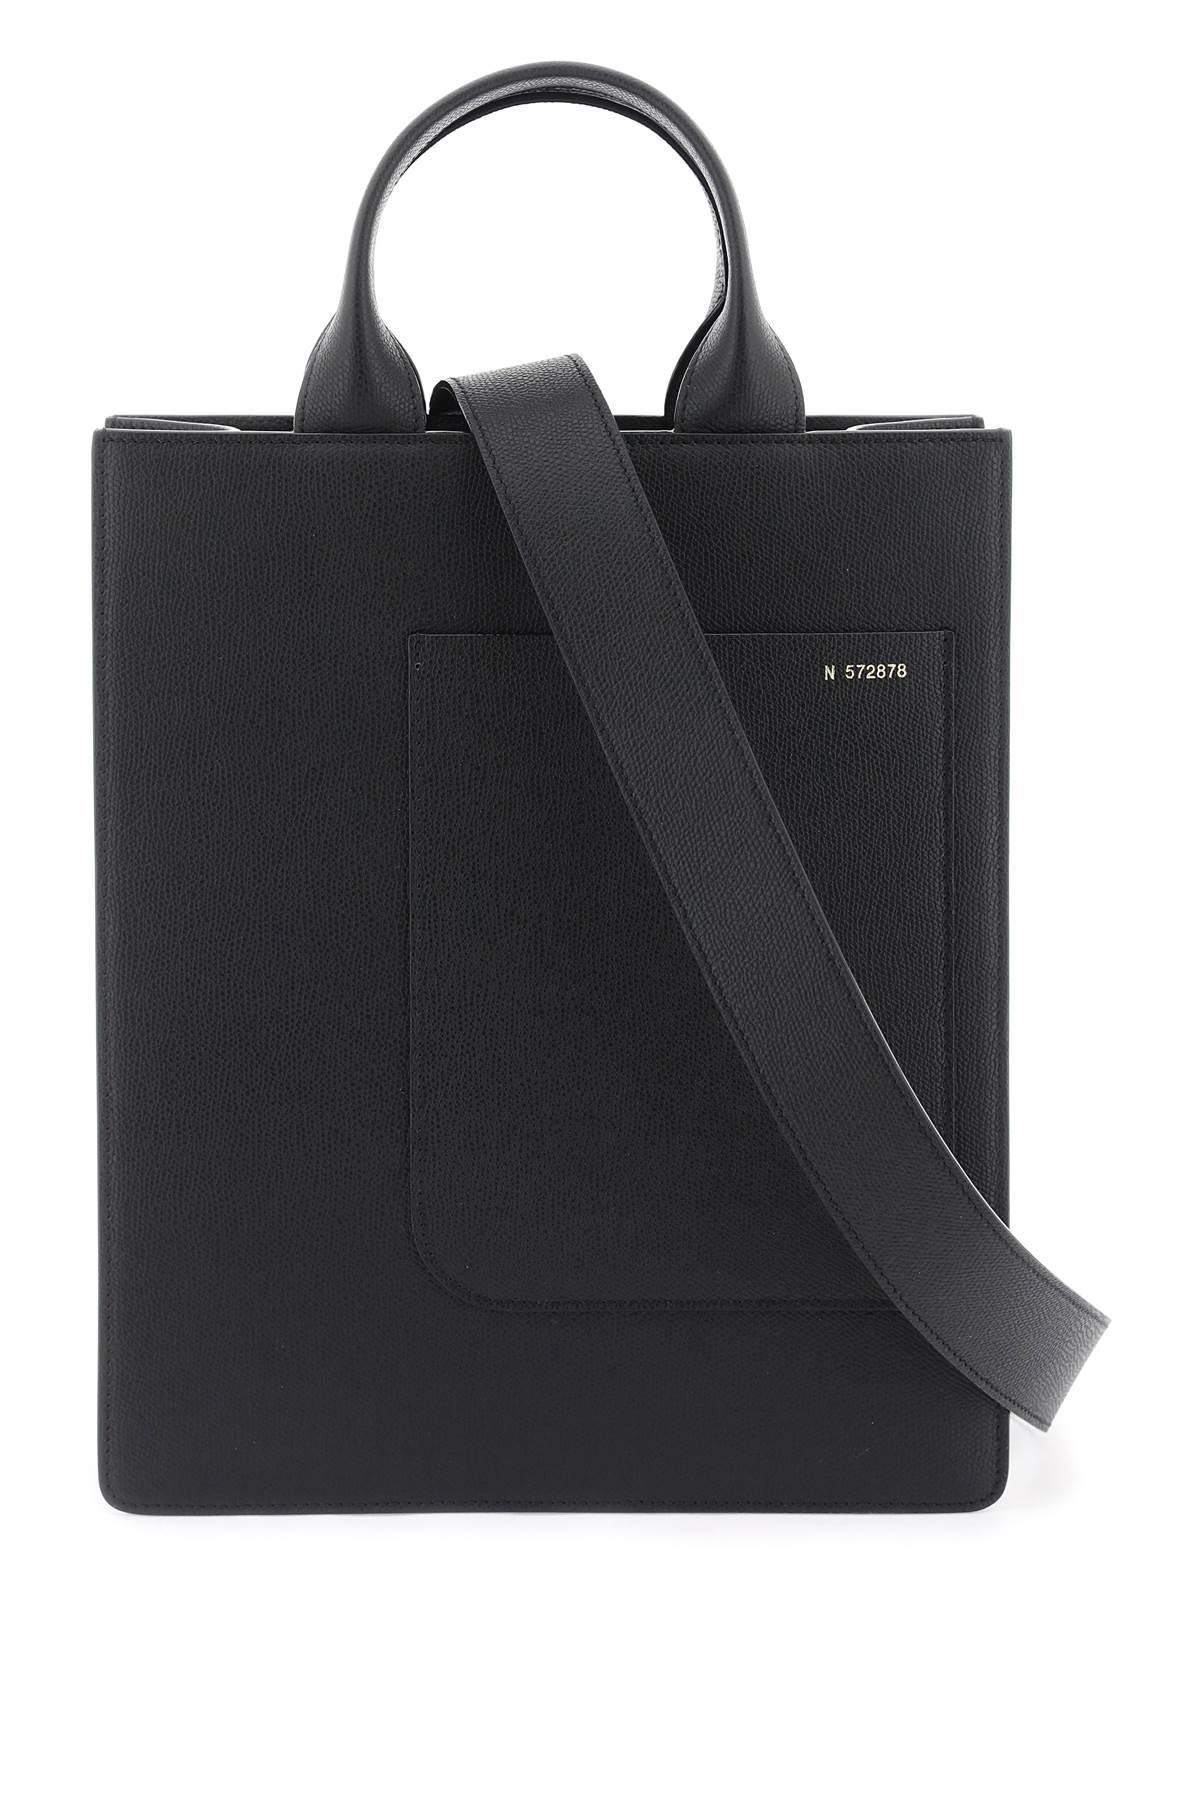 Valextra - Weekend Dark Gray Leather Convertible Hobo Bag